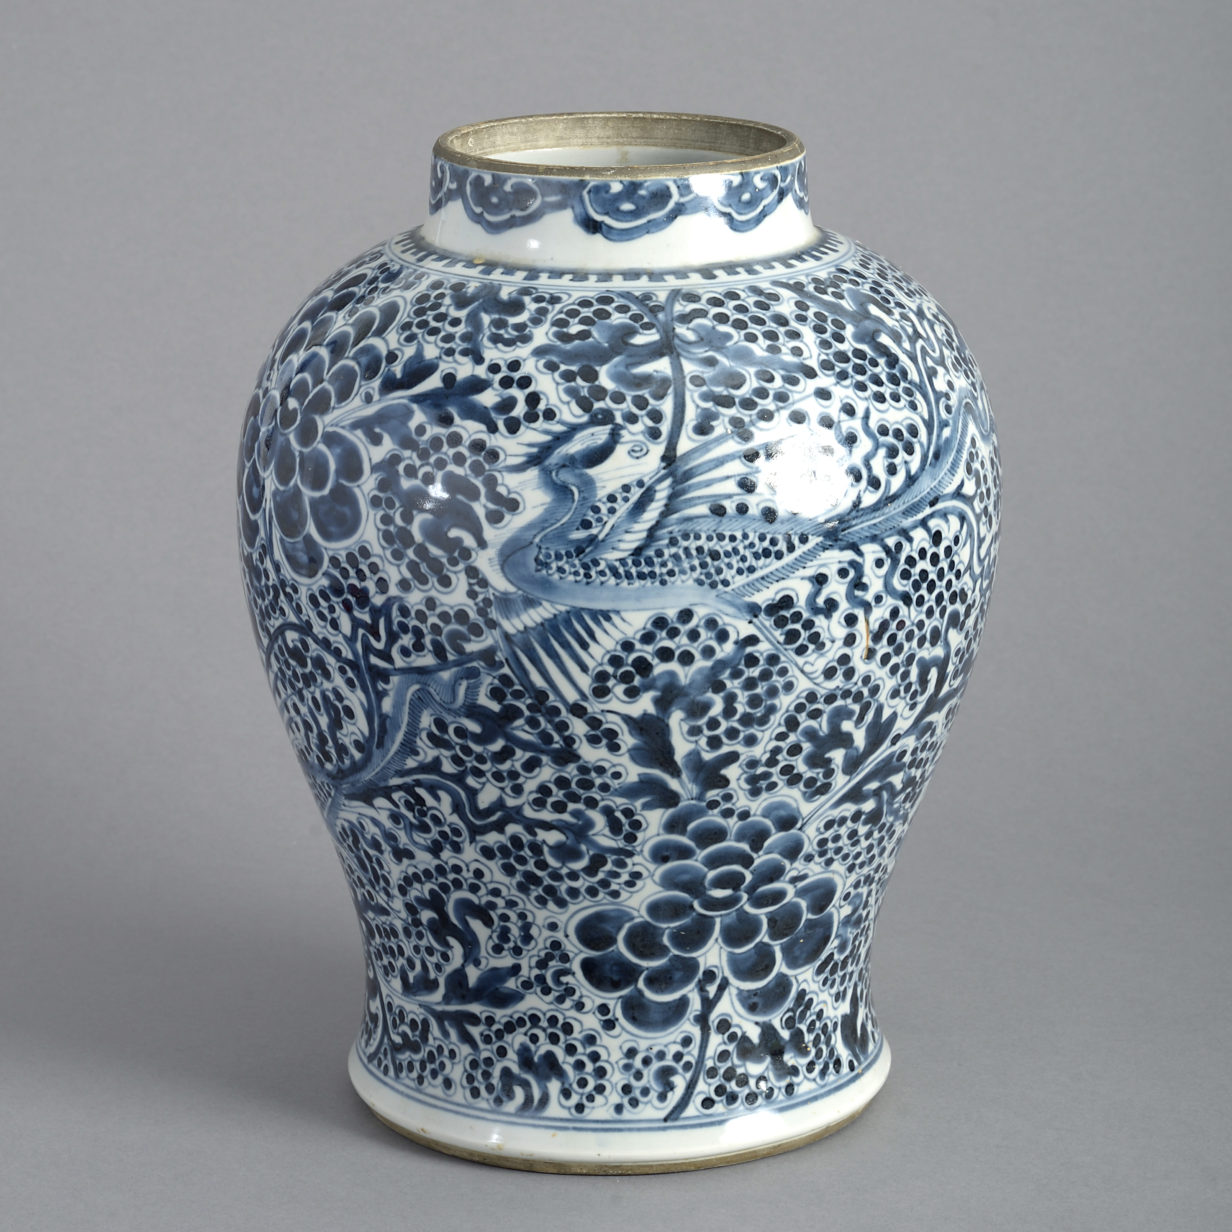 Early 18th century kangxi blue & white porcelain vase